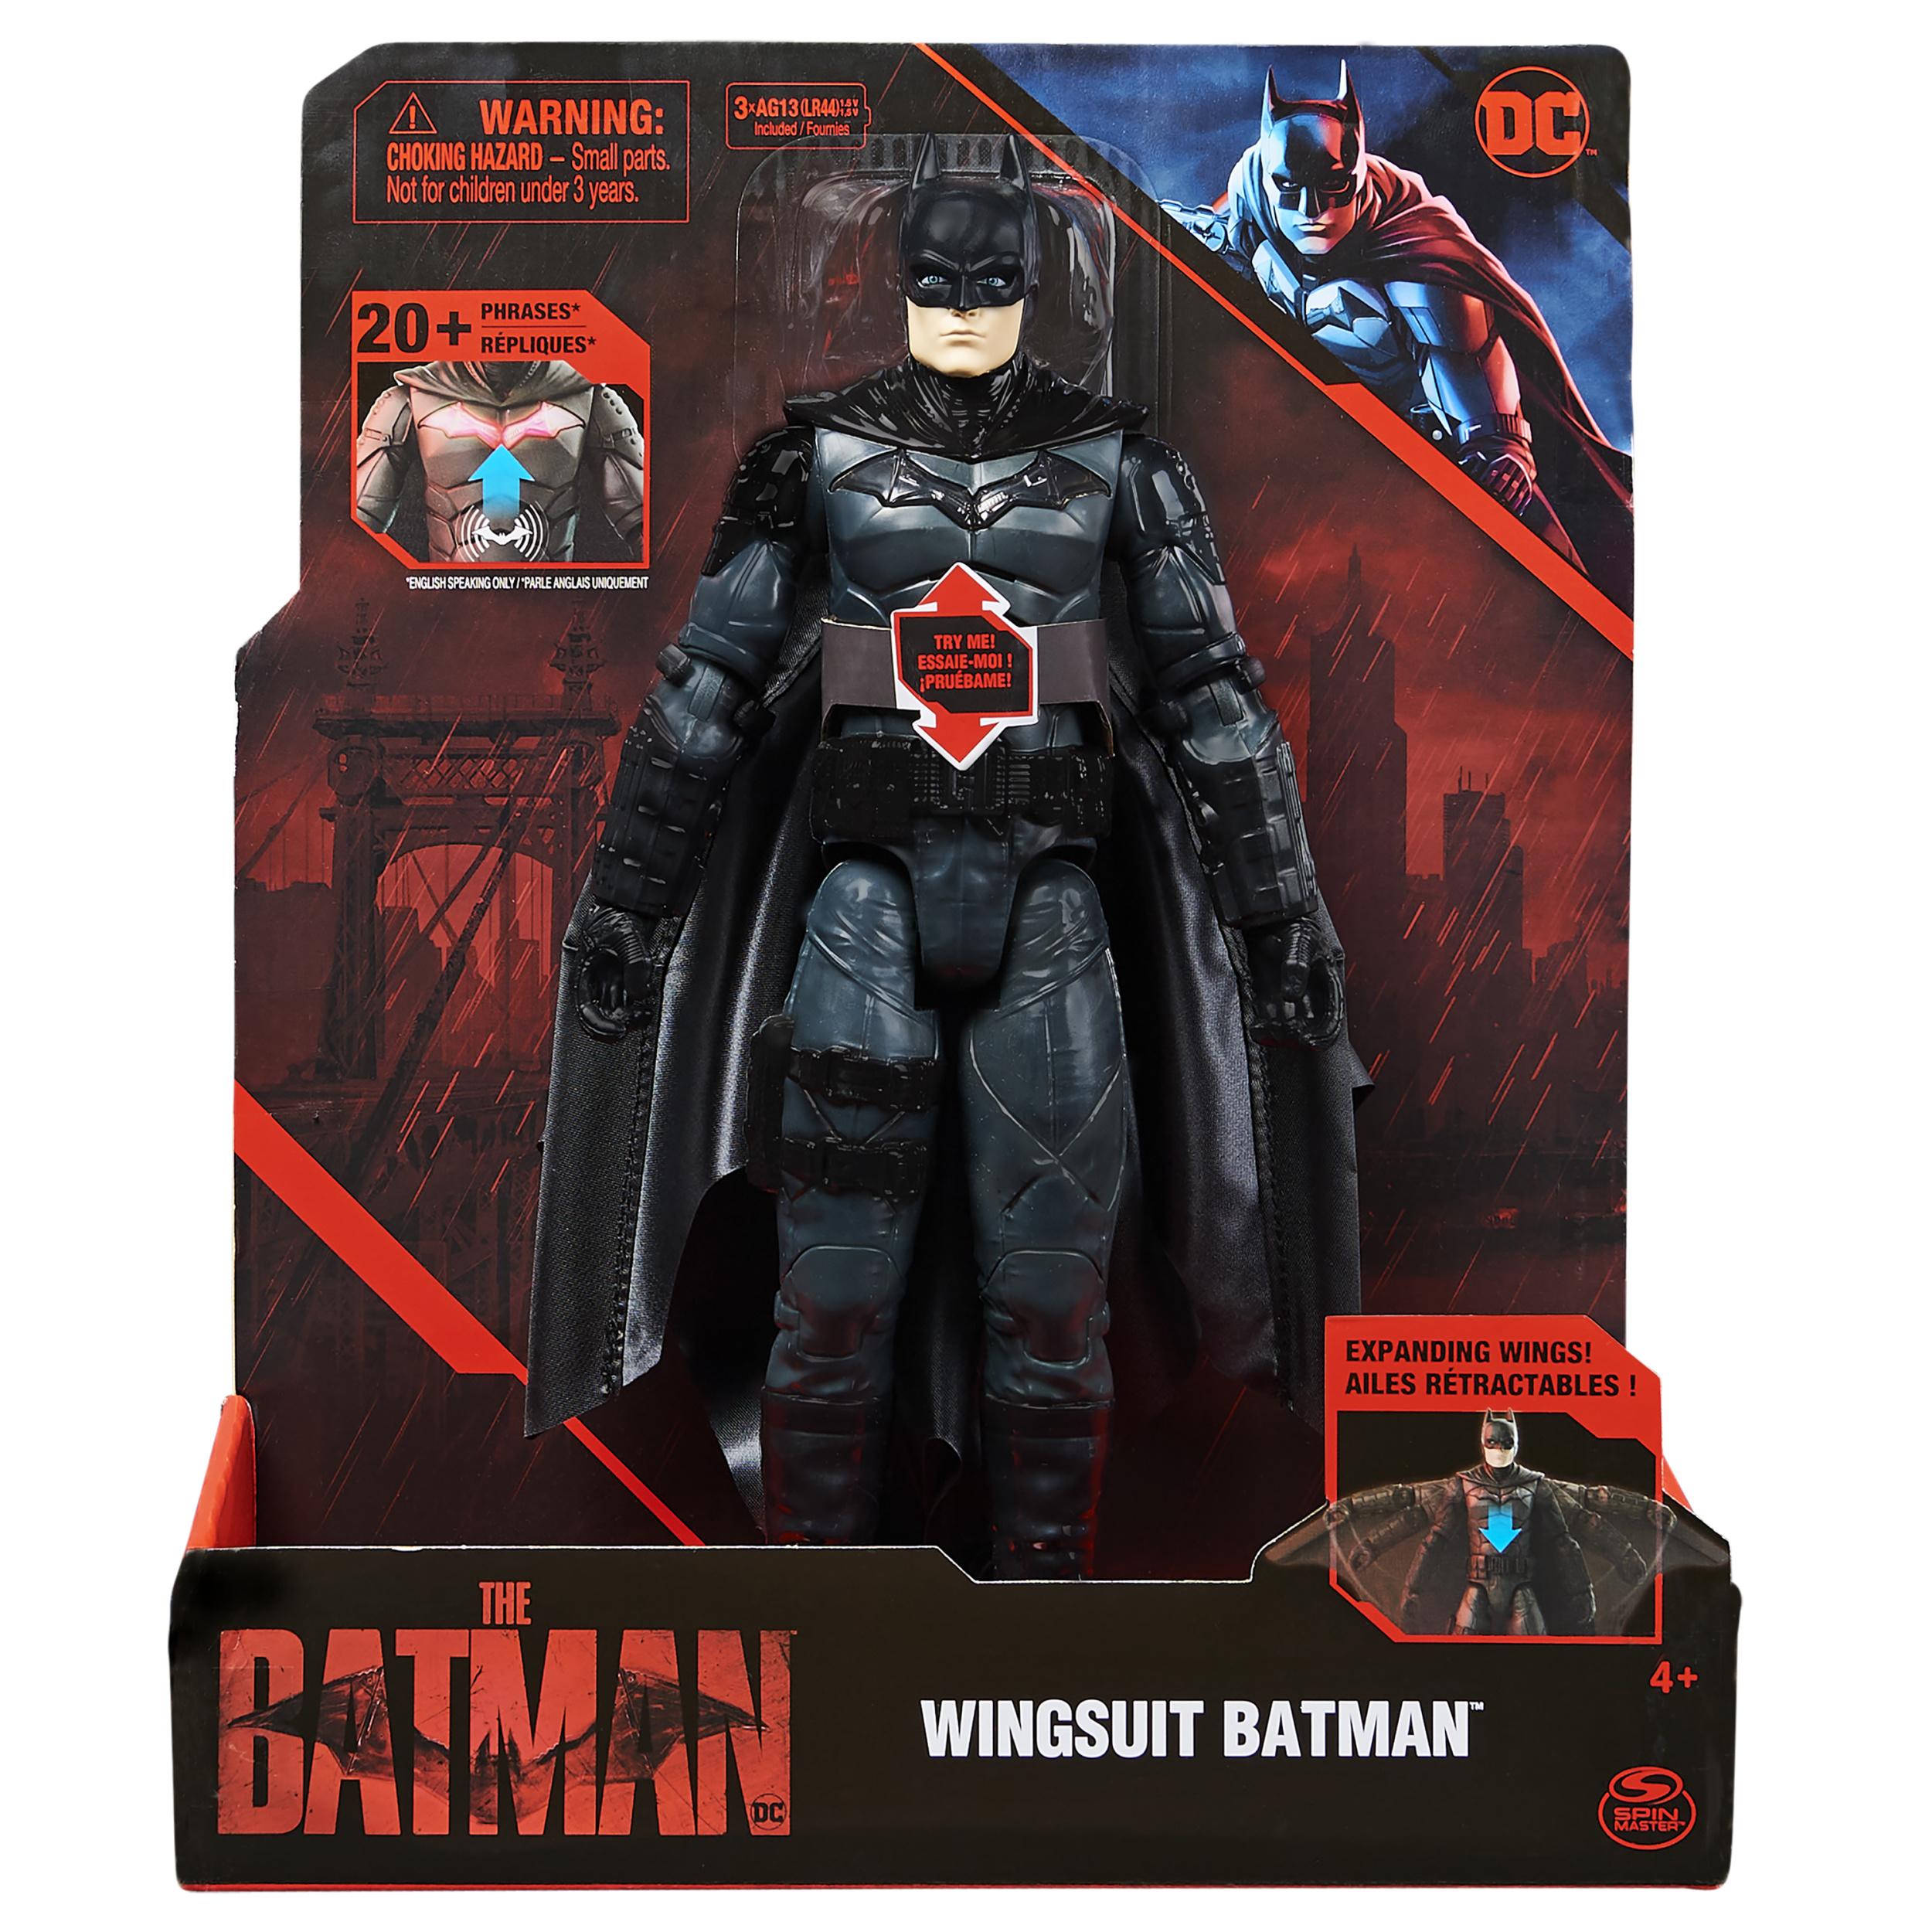 Wingsuit batman